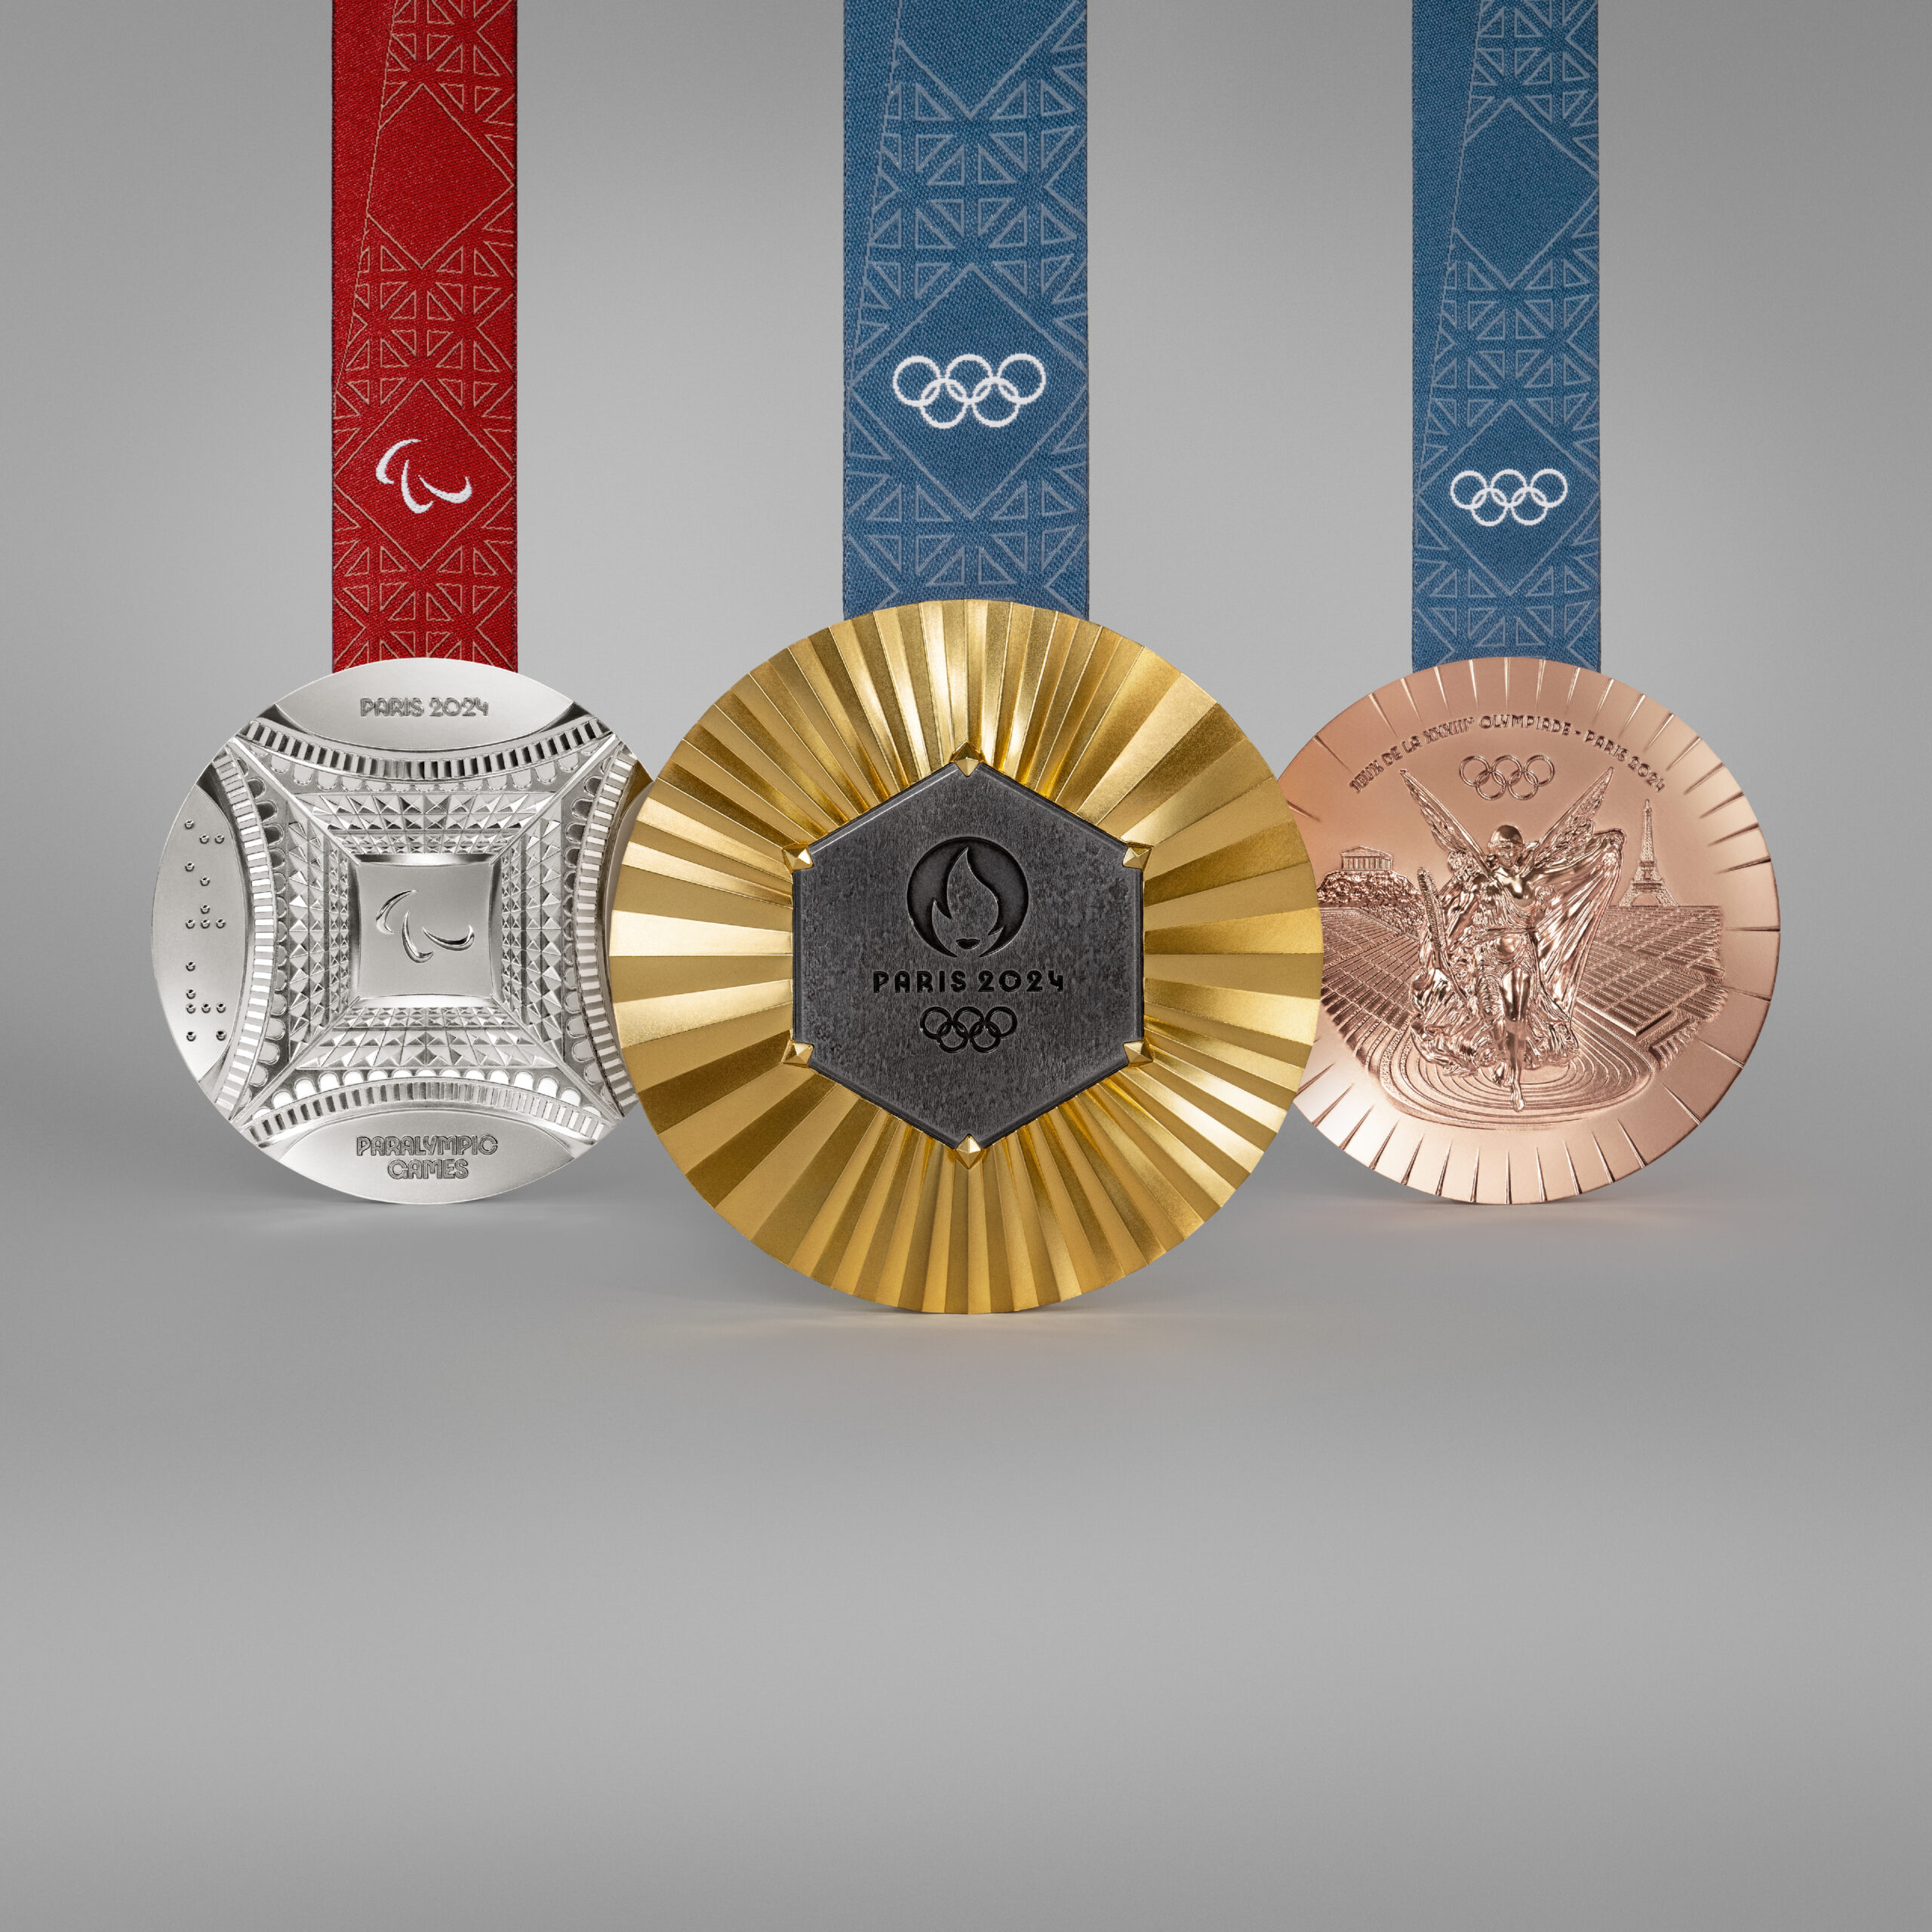 Paris2024 Medal